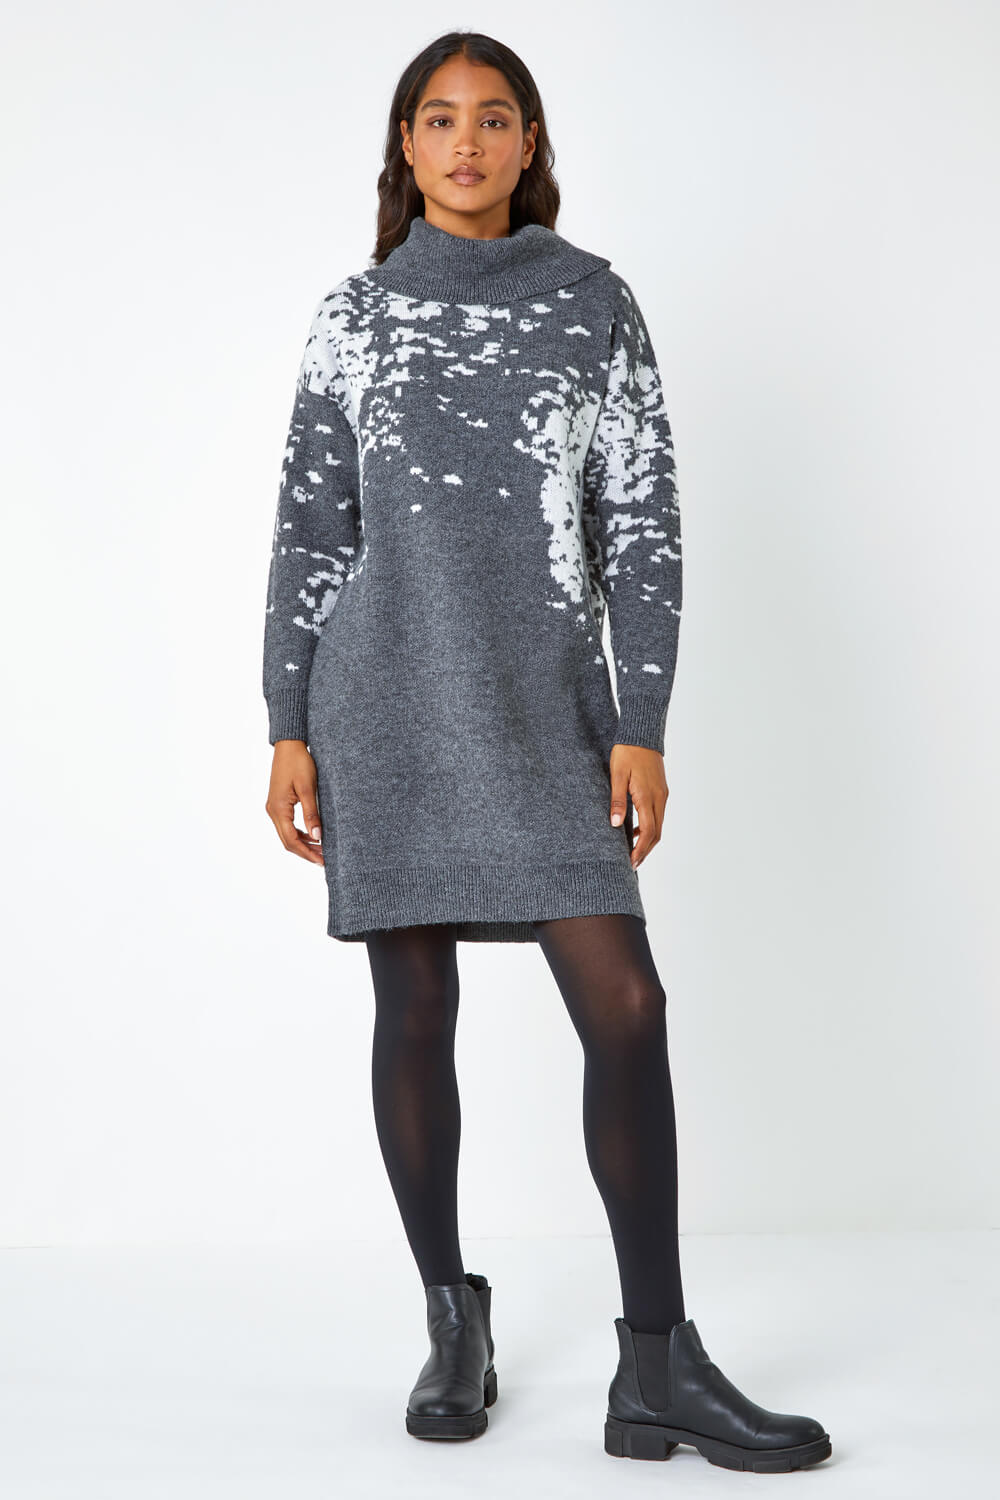 Dark Grey Abstract Print Cowl Neck Jumper Dress, Image 2 of 5